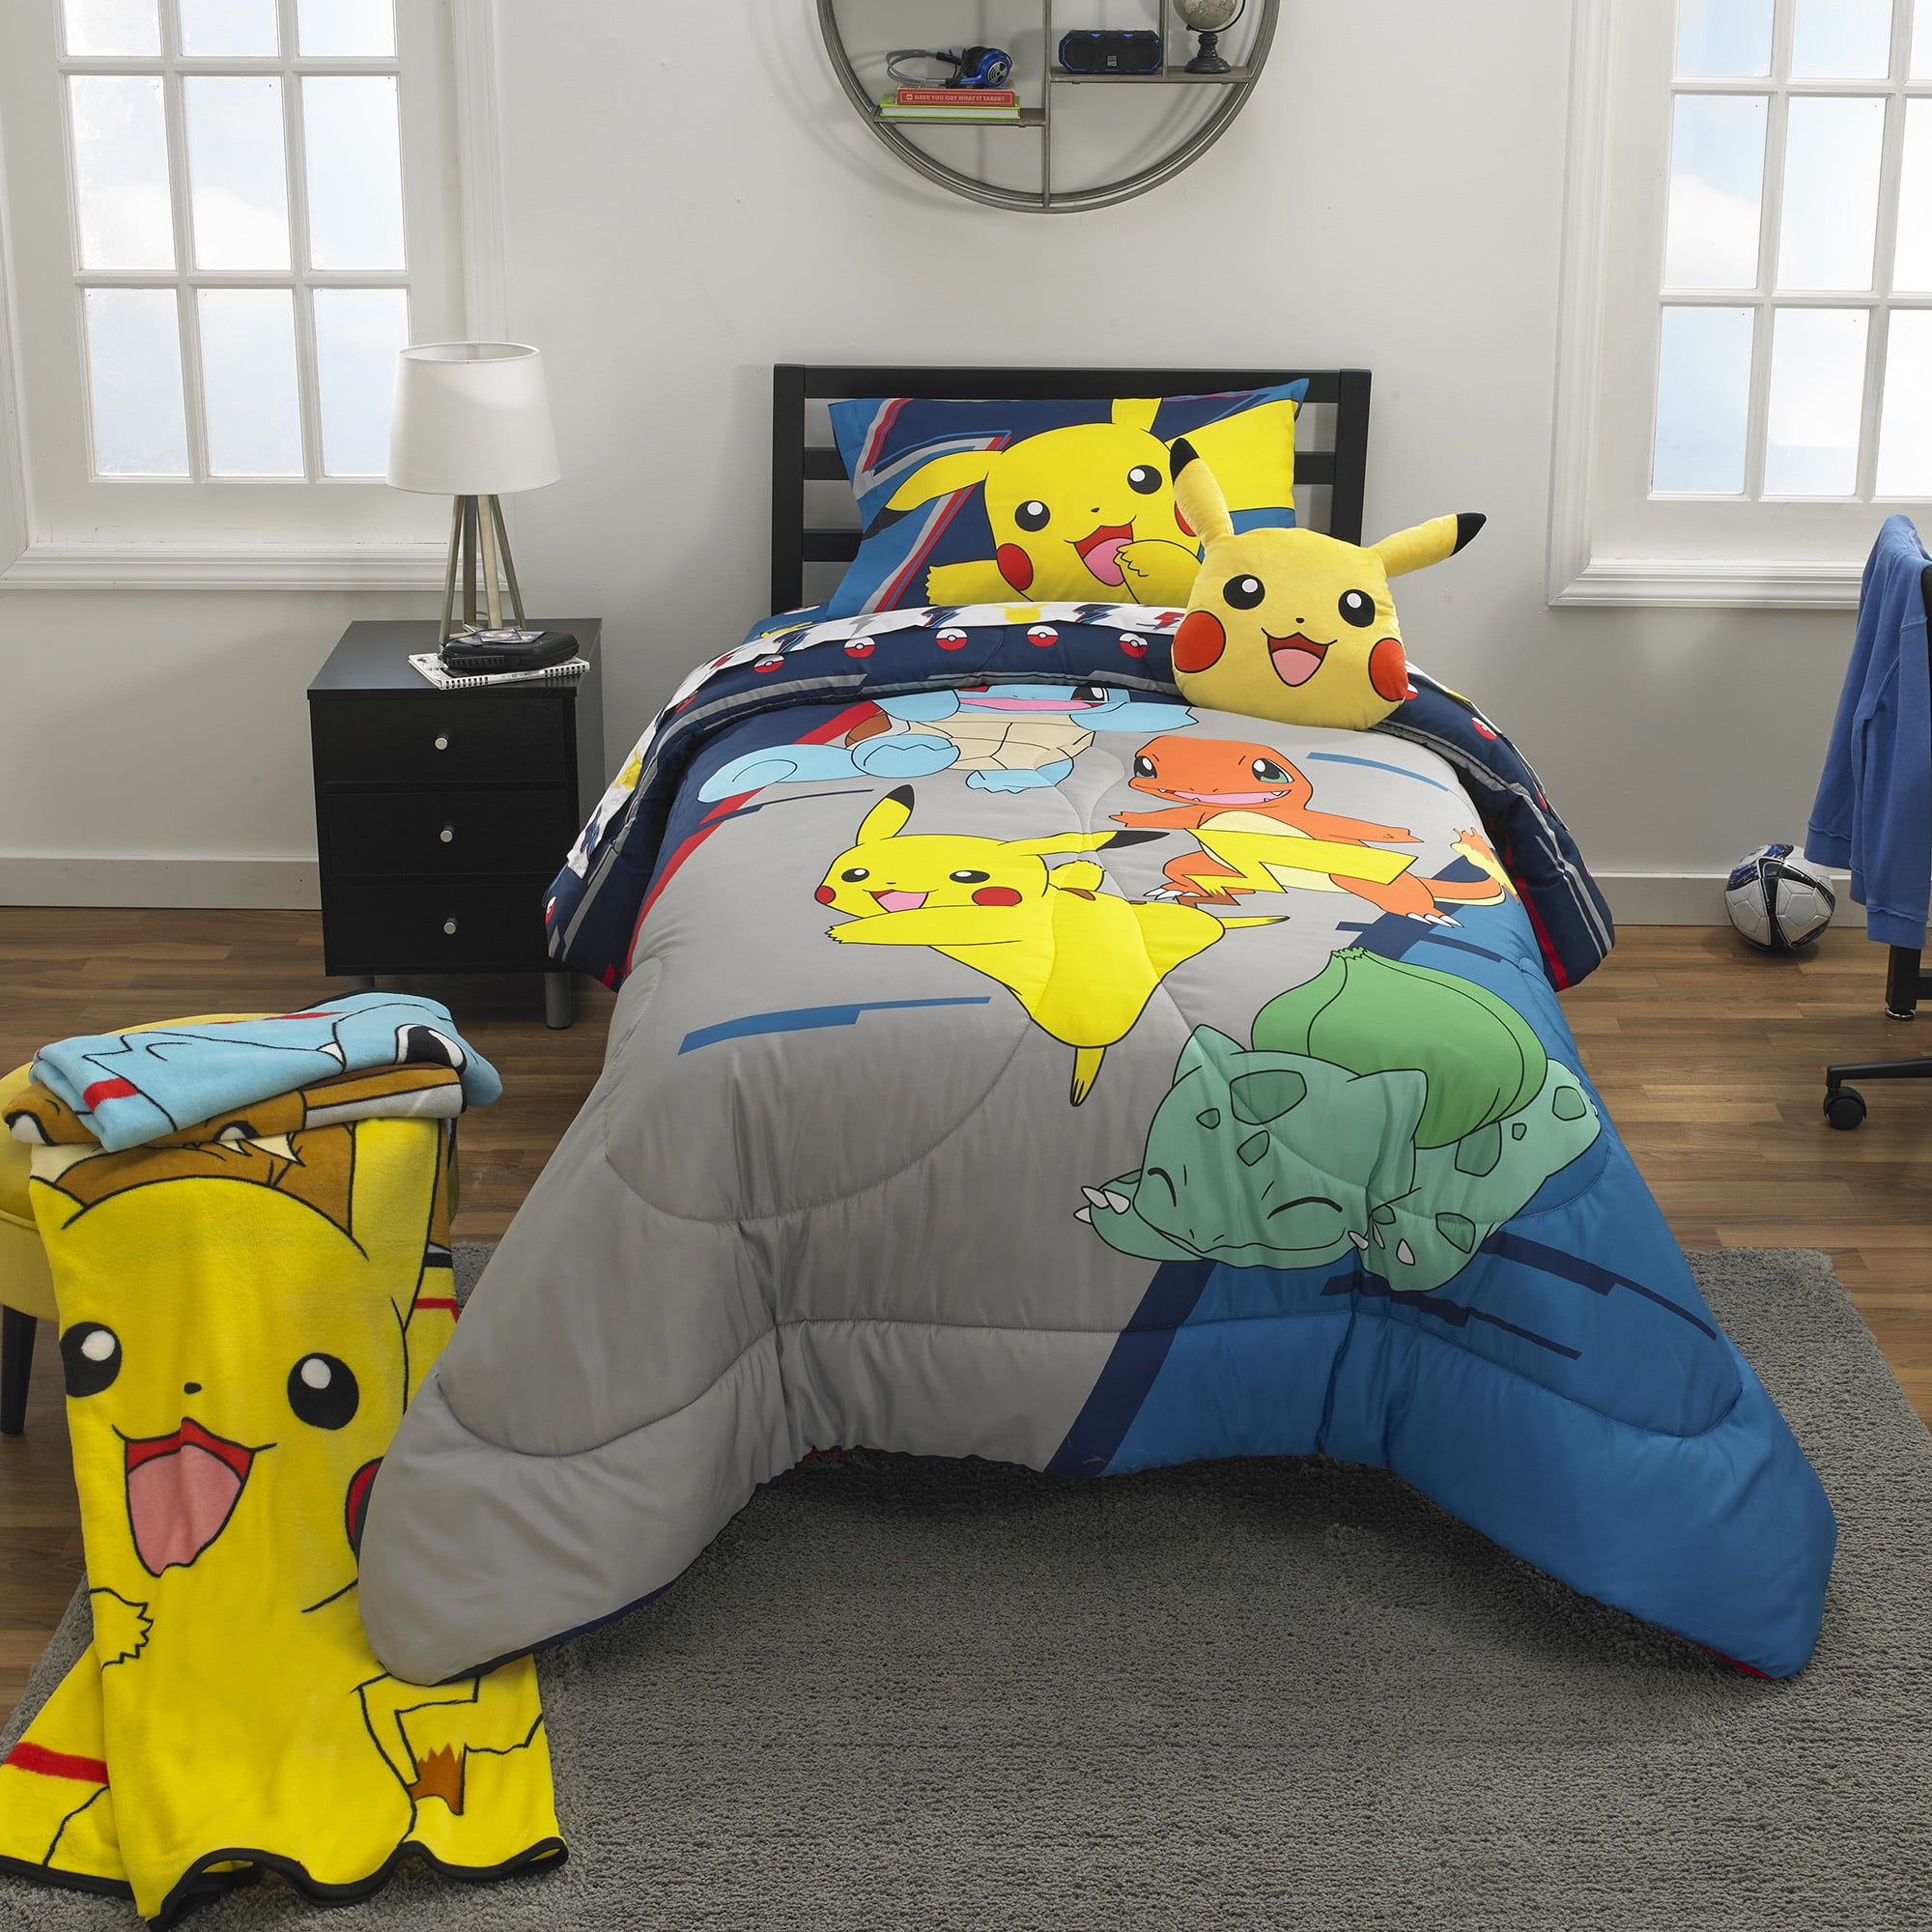 4-Piece Bedding Set Twin Size Pokemon Kids Reversible Comforter Sheet Bonus Tote 